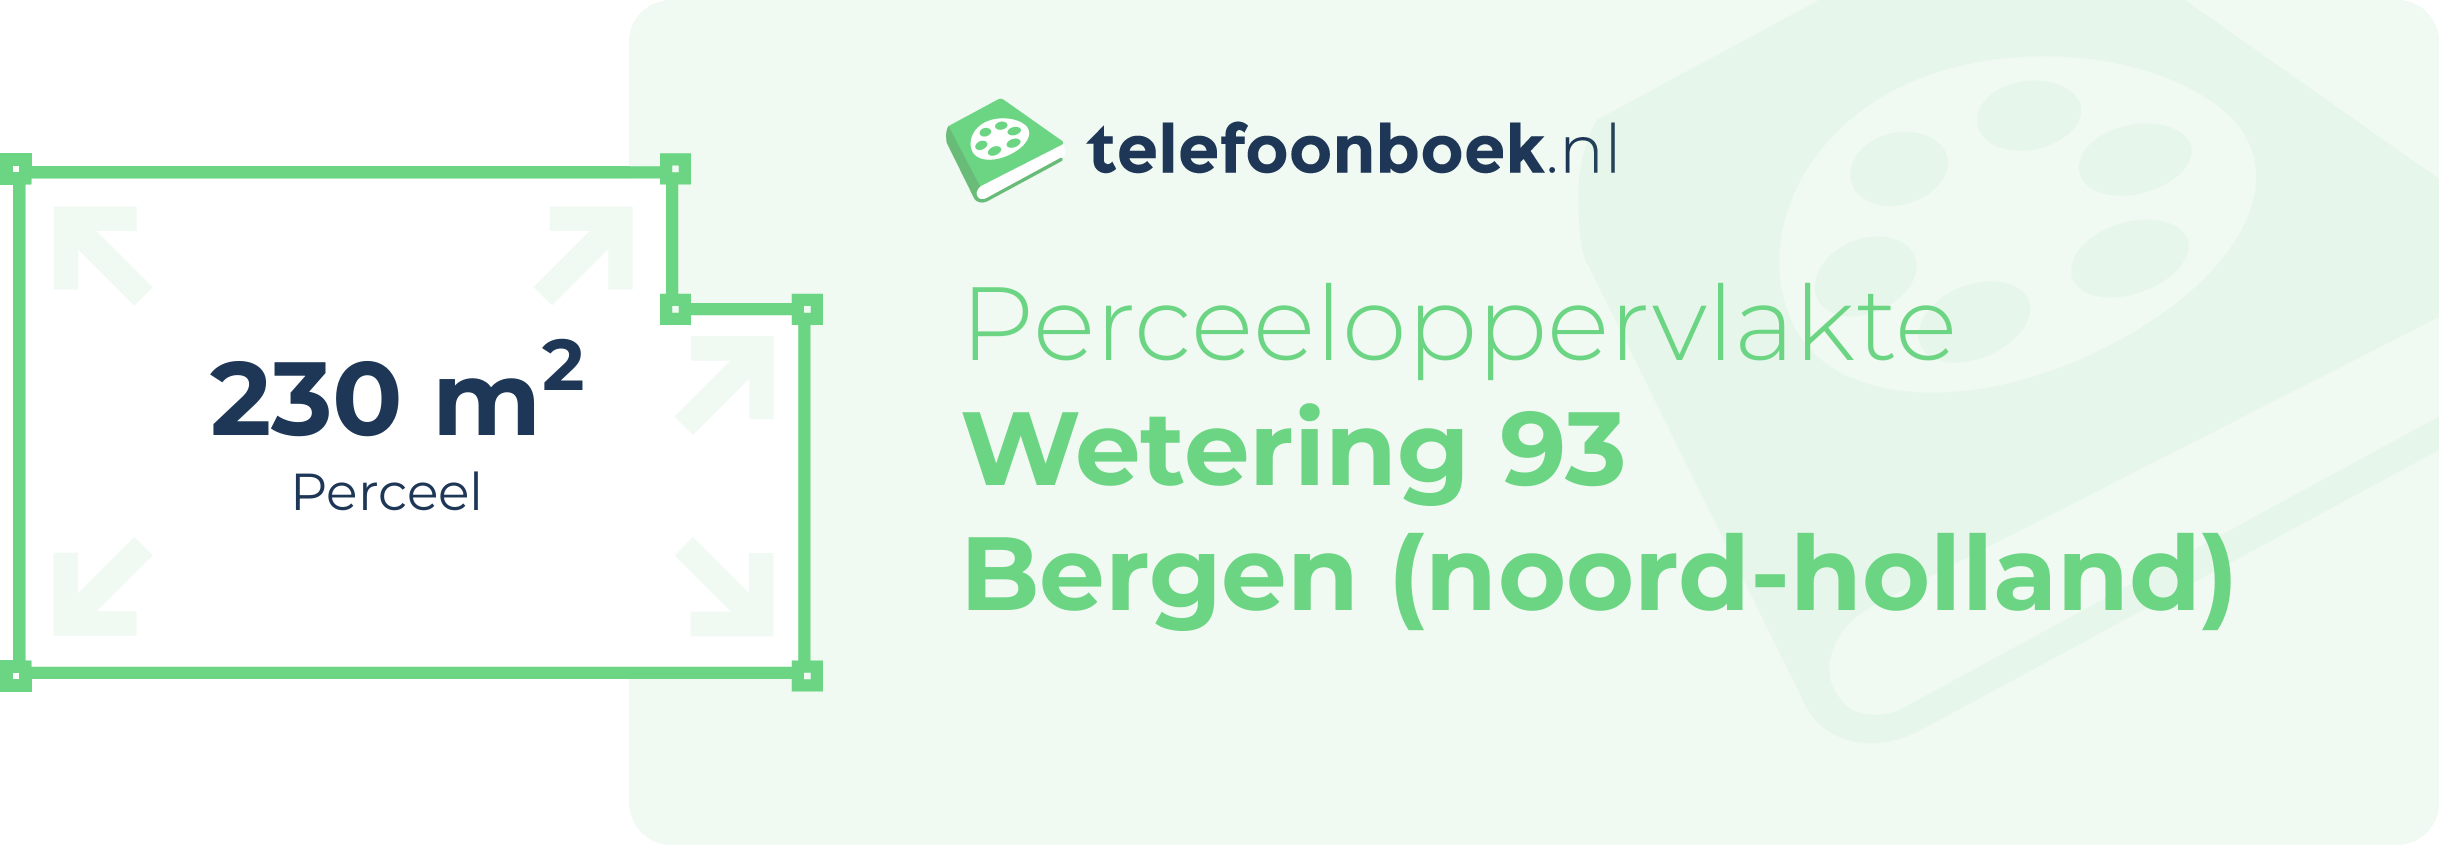 Perceeloppervlakte Wetering 93 Bergen (Noord-Holland)